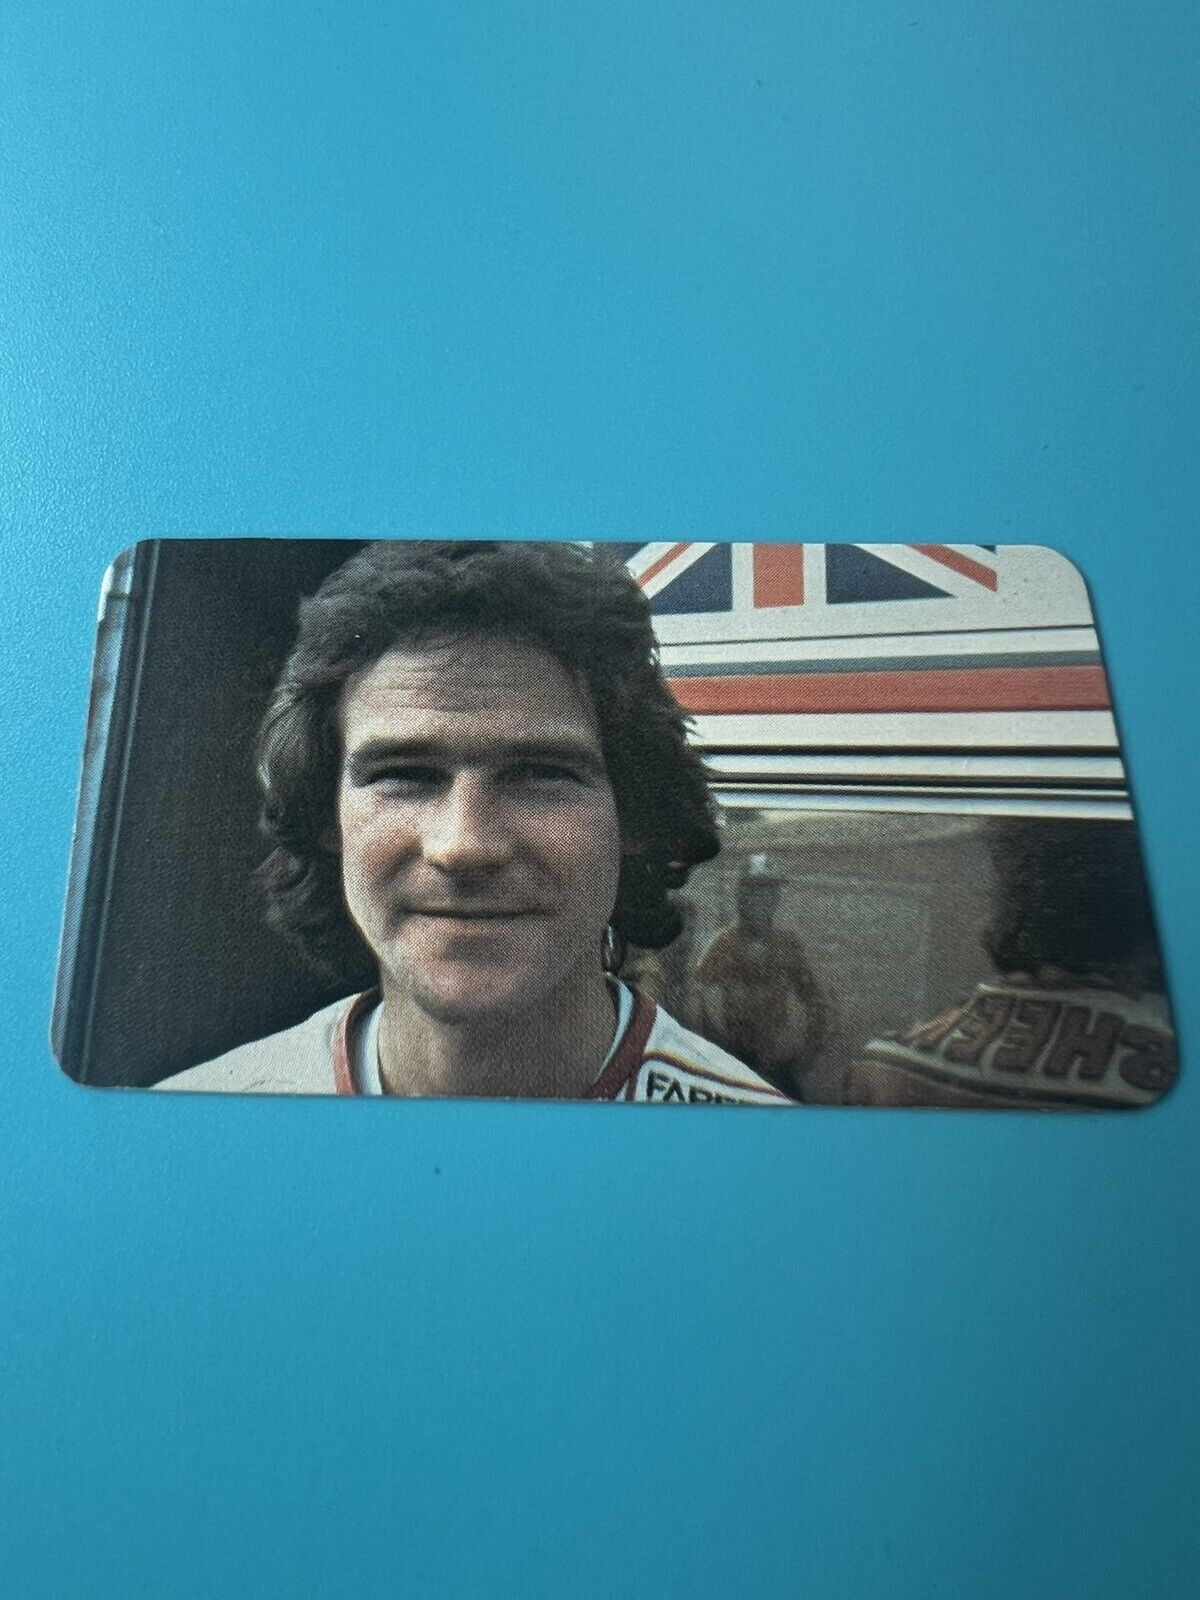 Golden Wonder 1979 All Stars #2 Barry Sheene (Motor Cycling Champion) Card